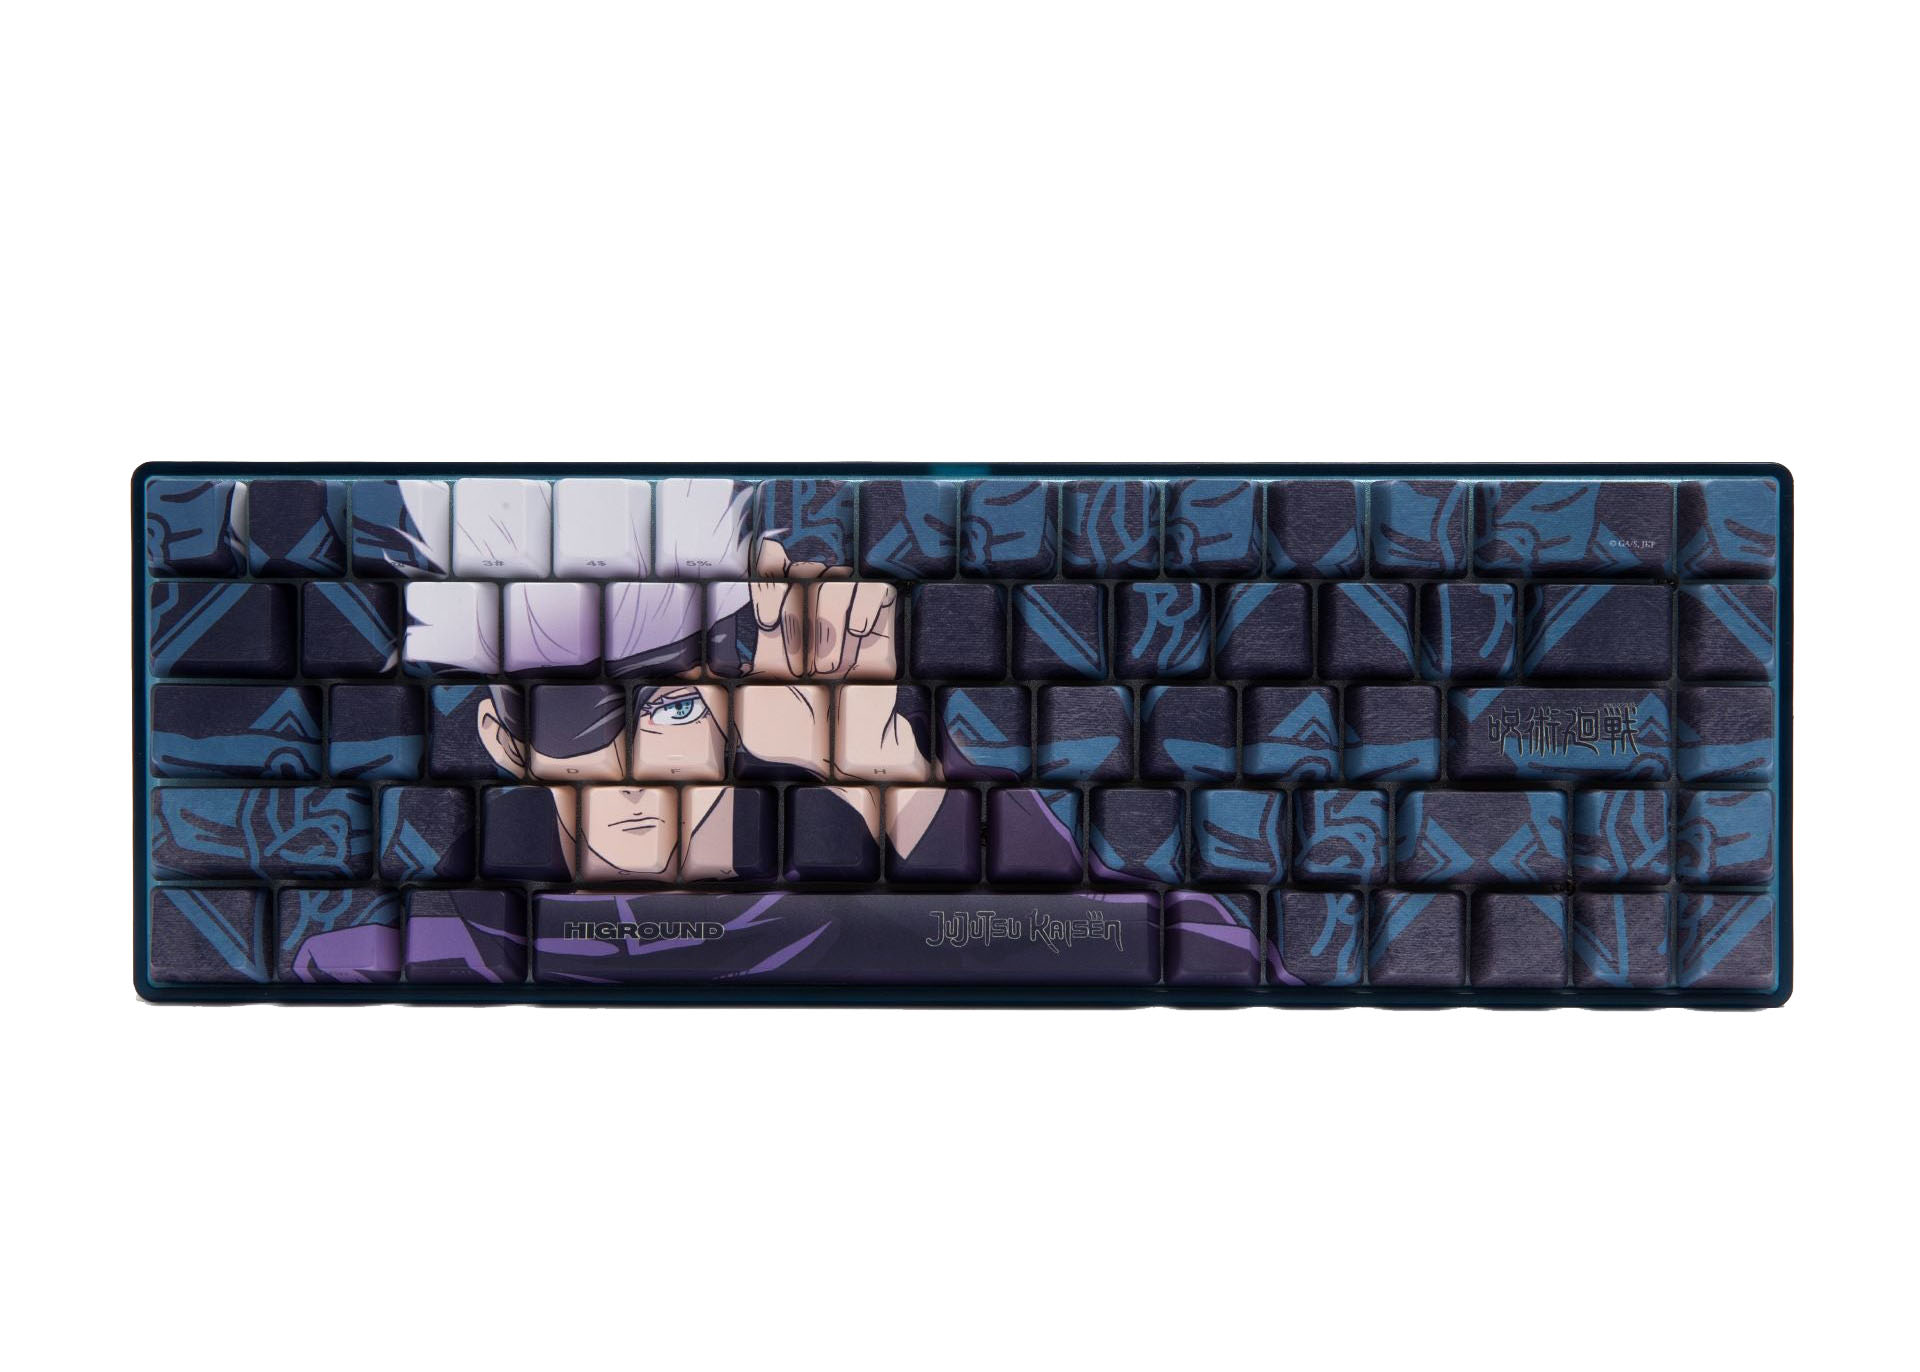 Custom Kurumi OEM Profile Anime Waifu Keycap Set For Mechanical Gaming  Keyboard | eBay